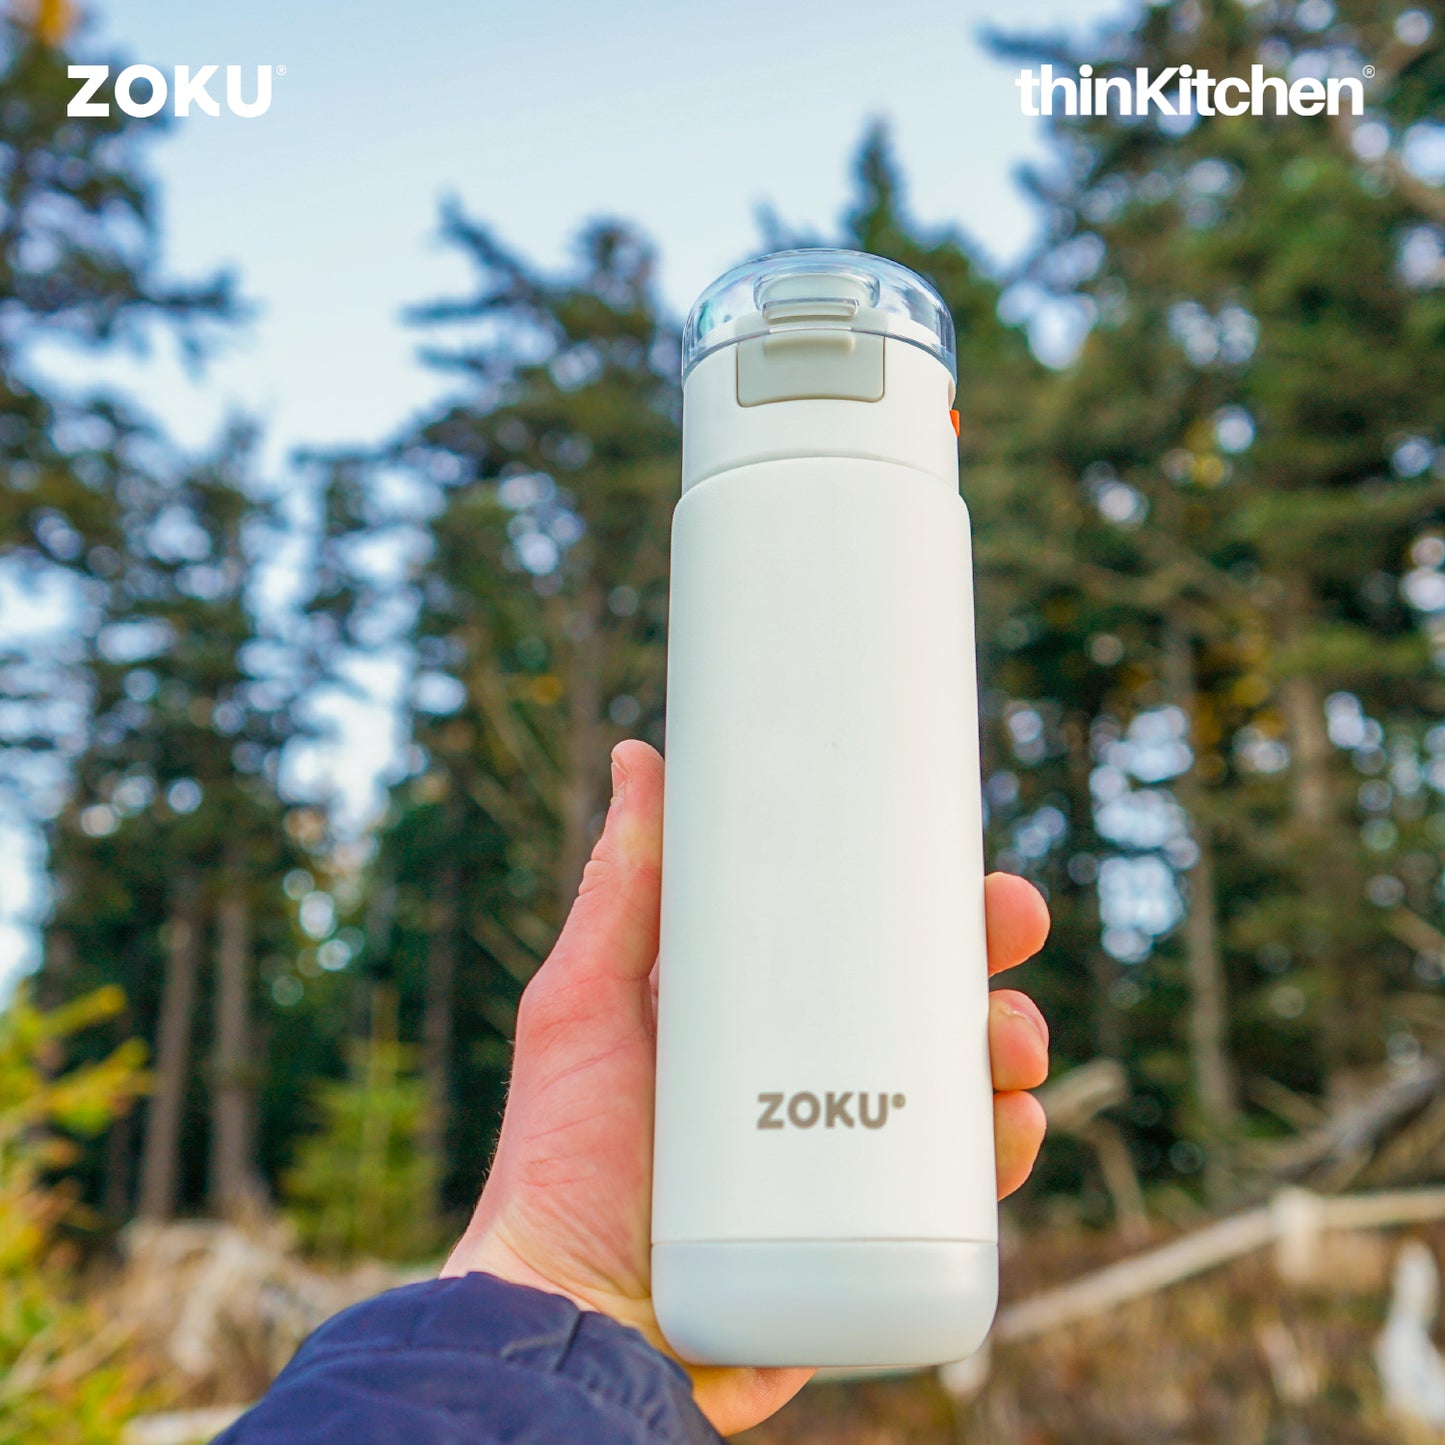 Zoku Stainless Flip Top Bottle, 500ml - White